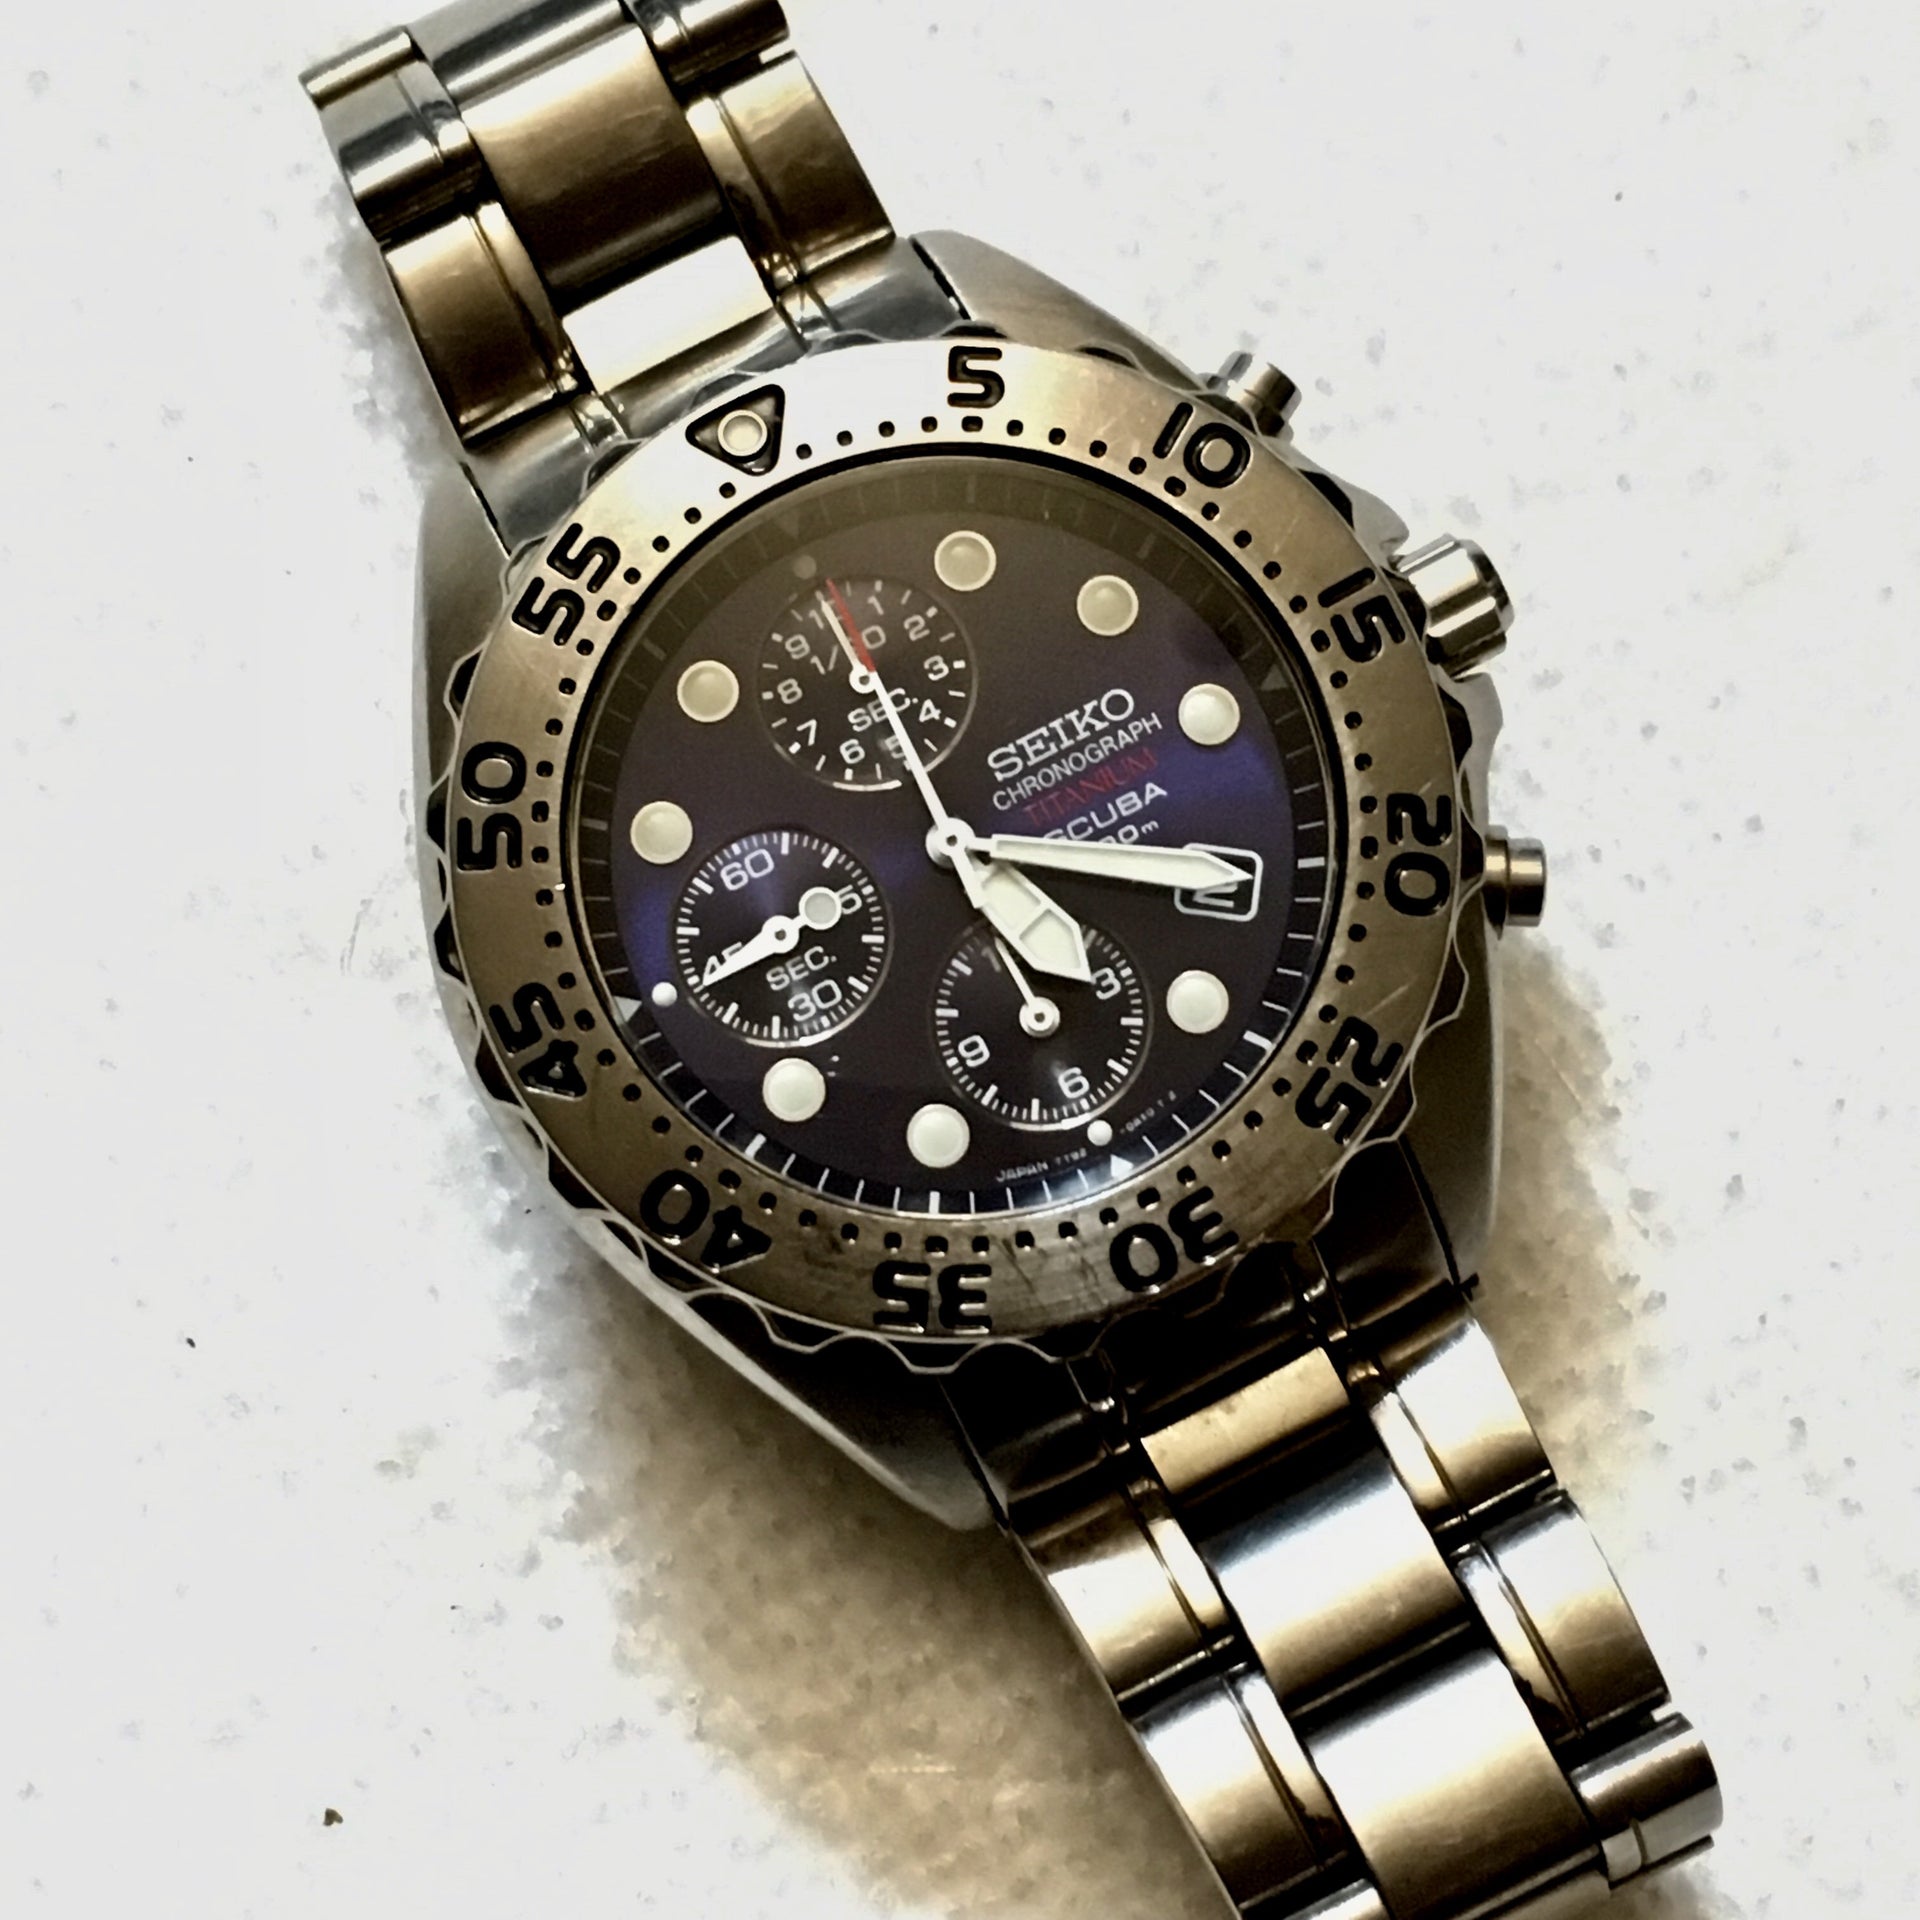 SOLD: Seiko SBDQ003 Titanium Chronograph Diver Prospex Dive Watch |  WatchUSeek Watch Forums